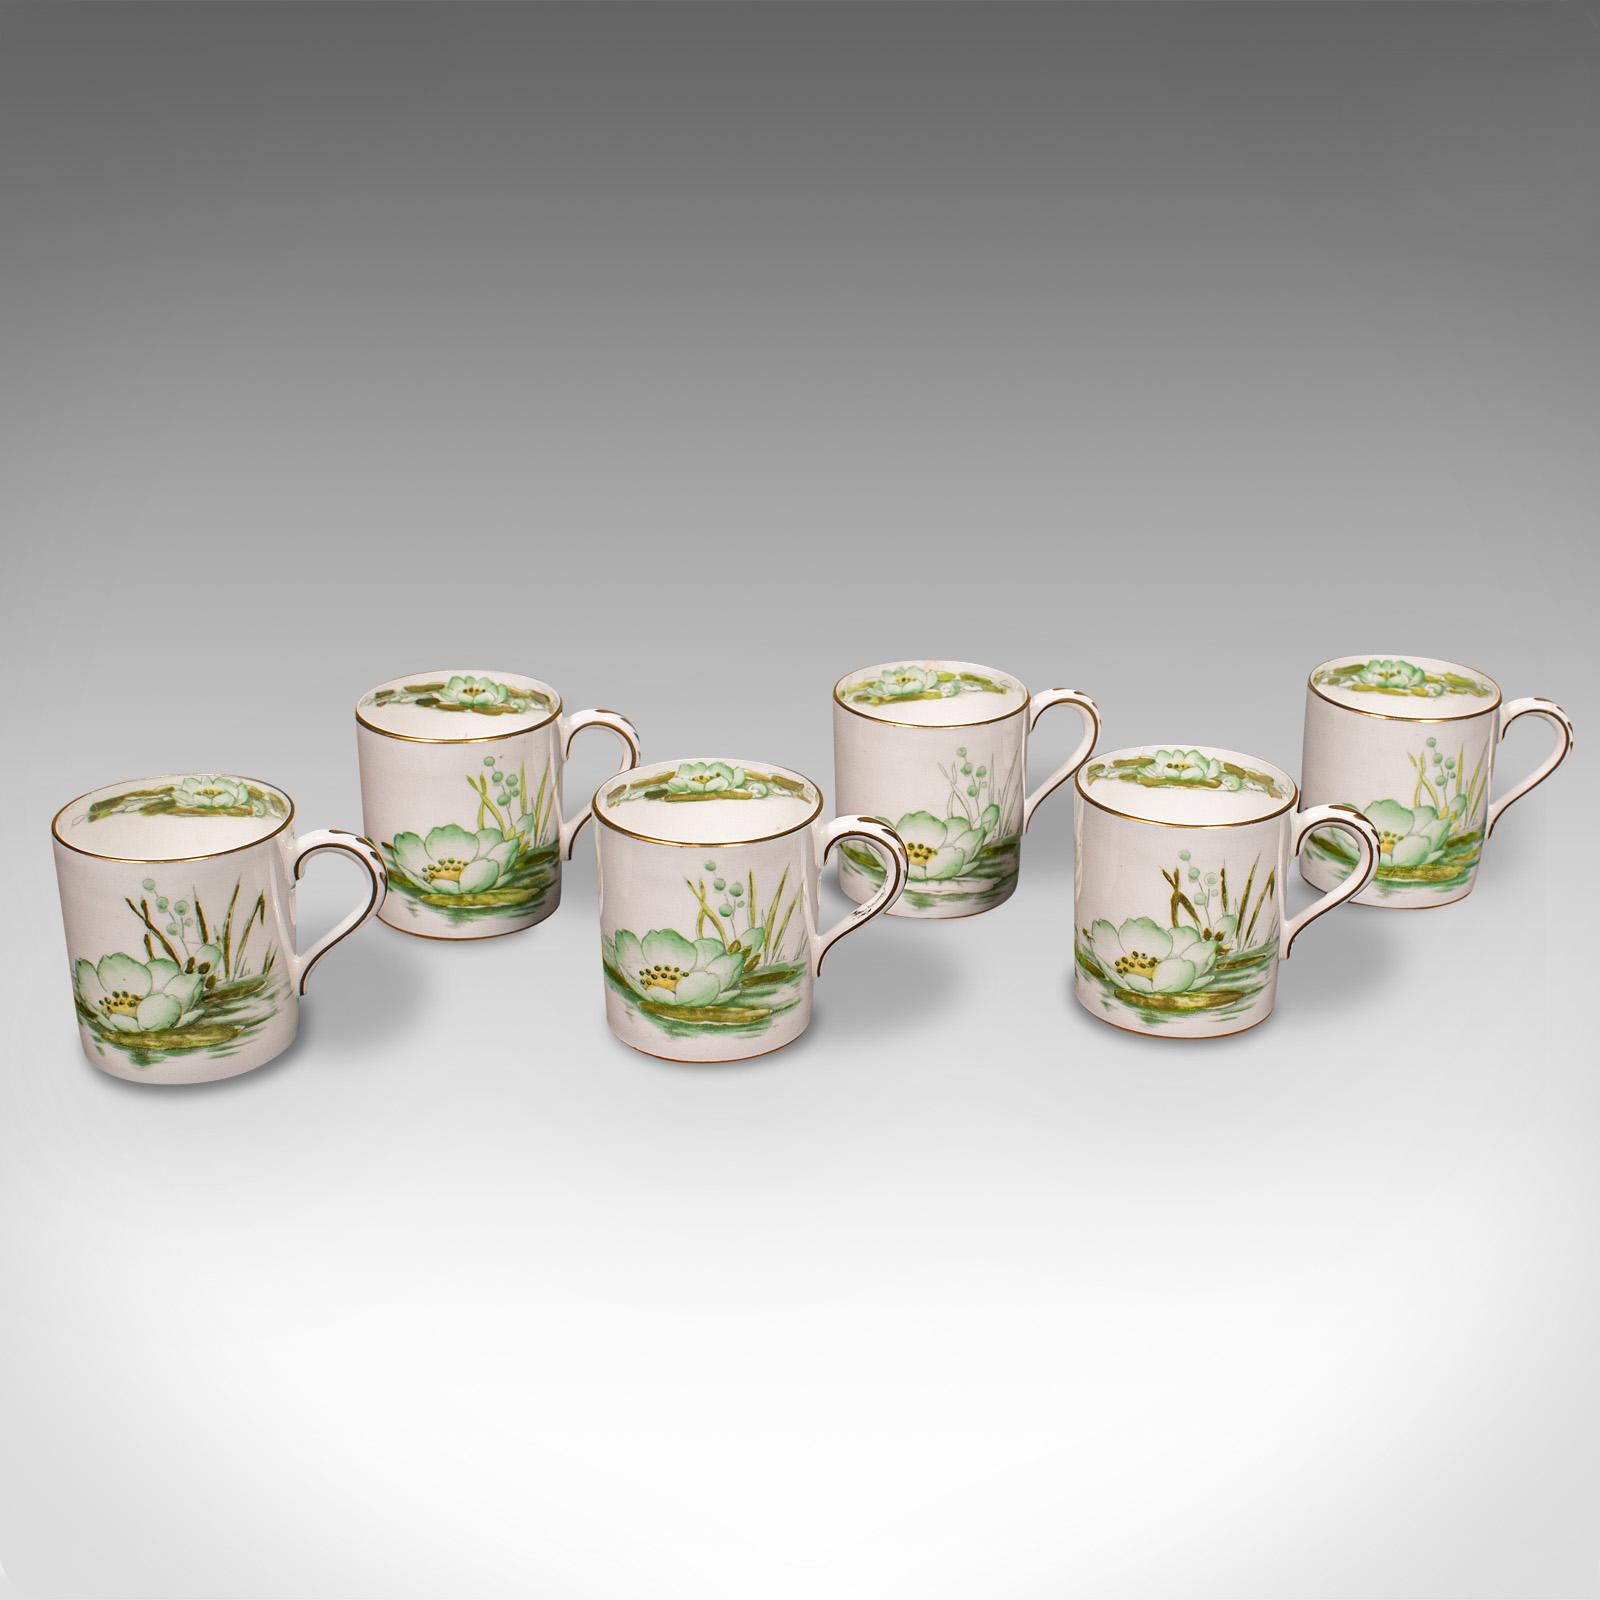 Vintage Cased Tea Set, English Ceramic, Coffee Cans, Silver Spoon, Hallmark 1932 For Sale 1